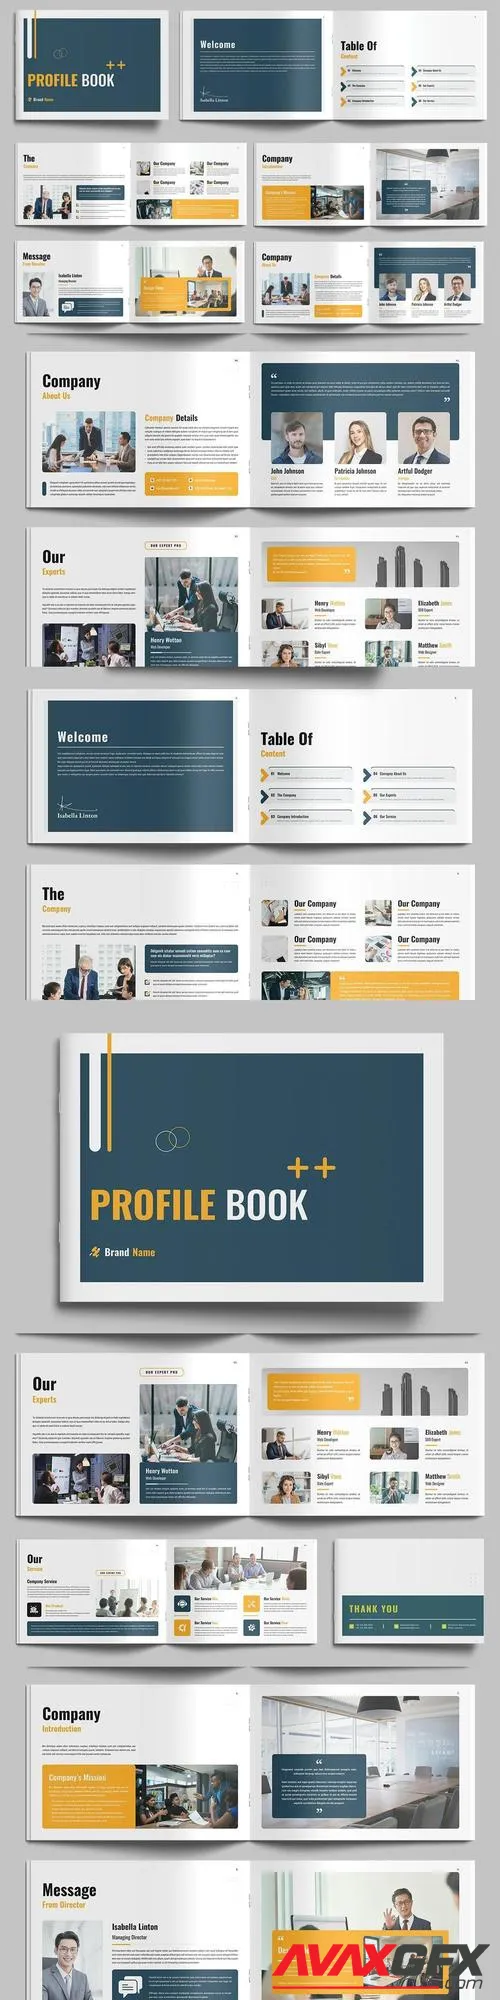 Business Profile Book Design Template